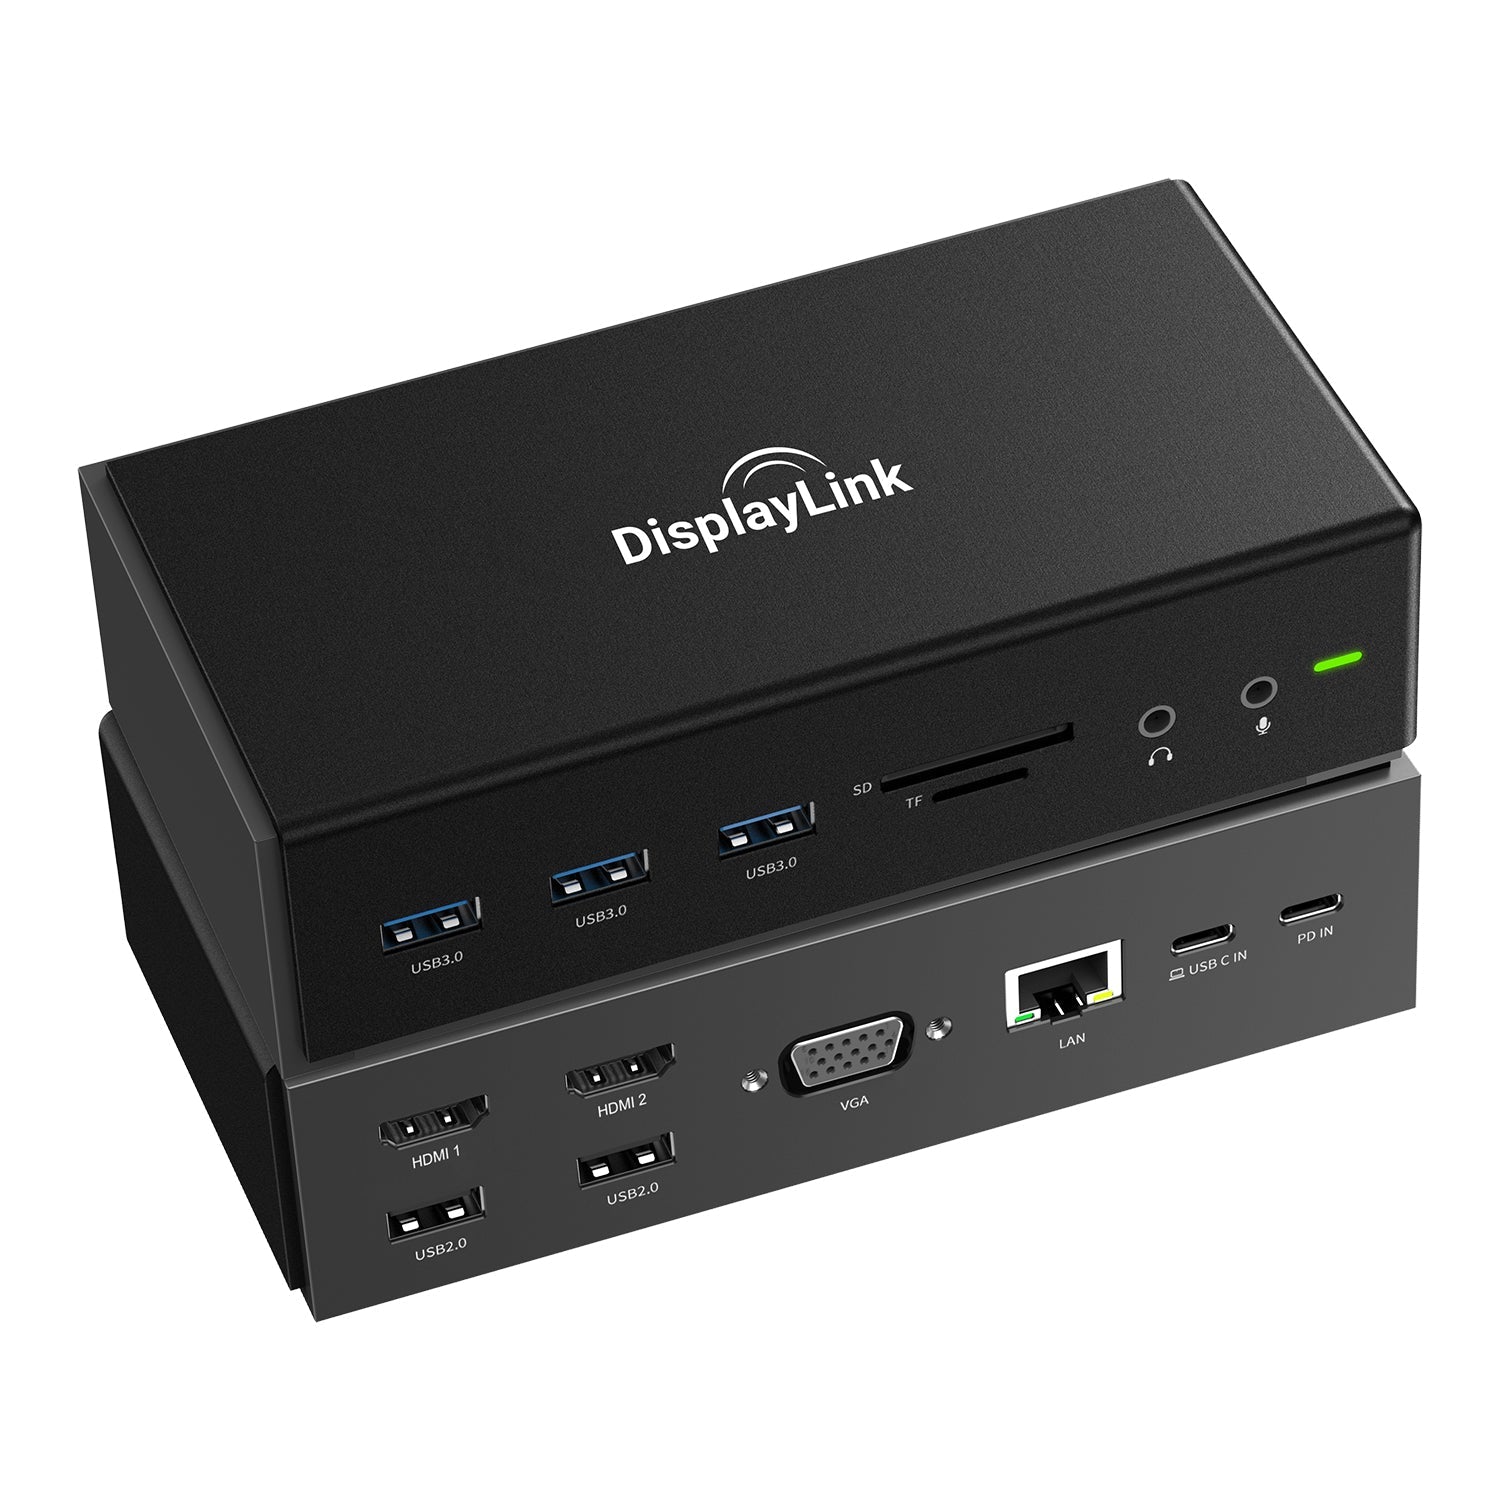 15 in 1 USB C Thunderbolt 3 Universal Laptop Docking Station PD100W,HDMI 2K@60Hz DisplayLink - QGeeM